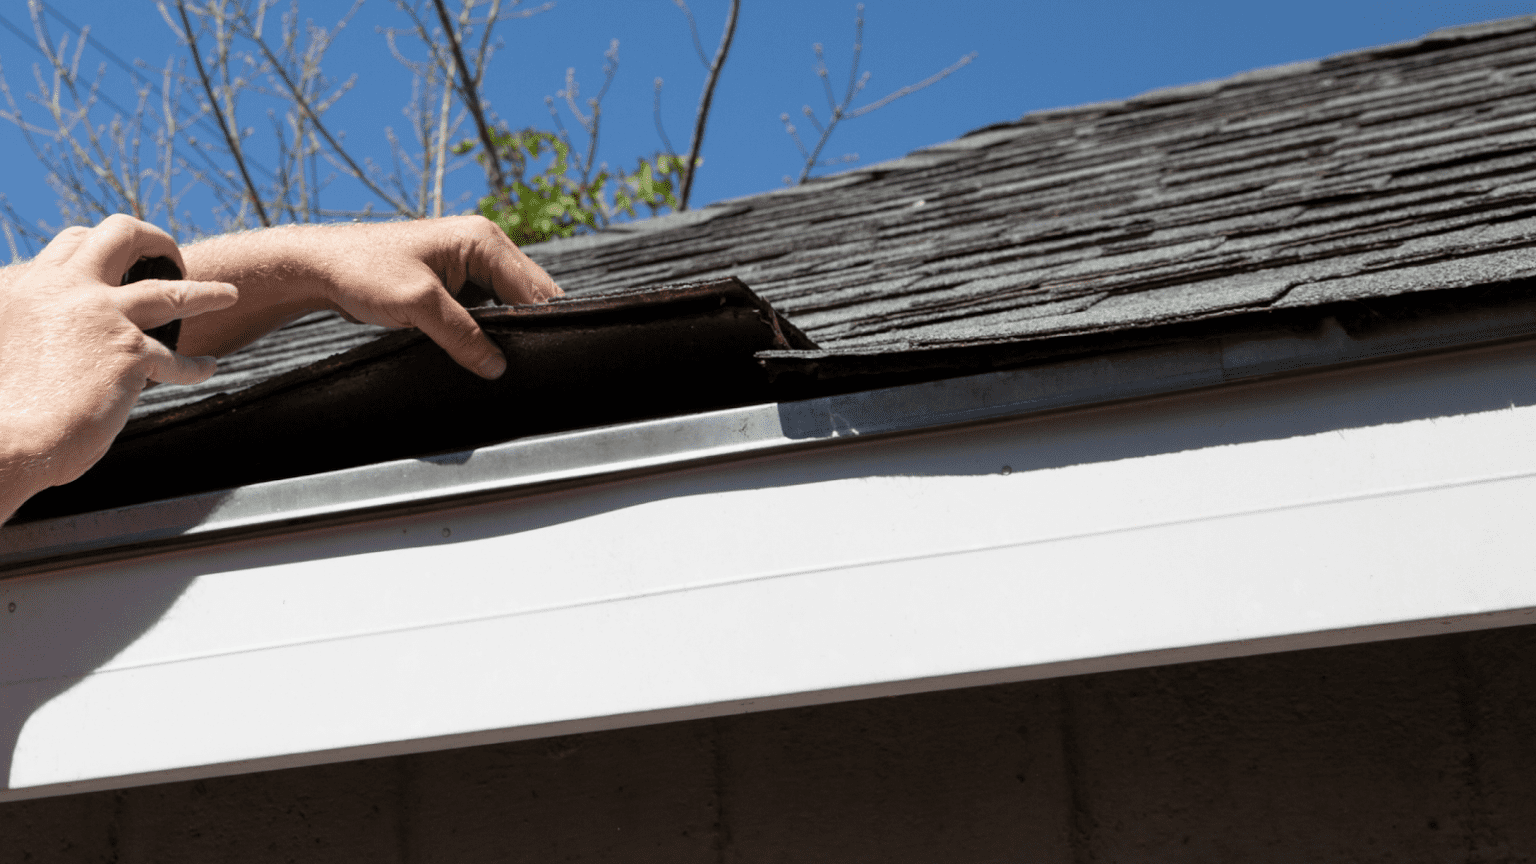 shingle roof installation